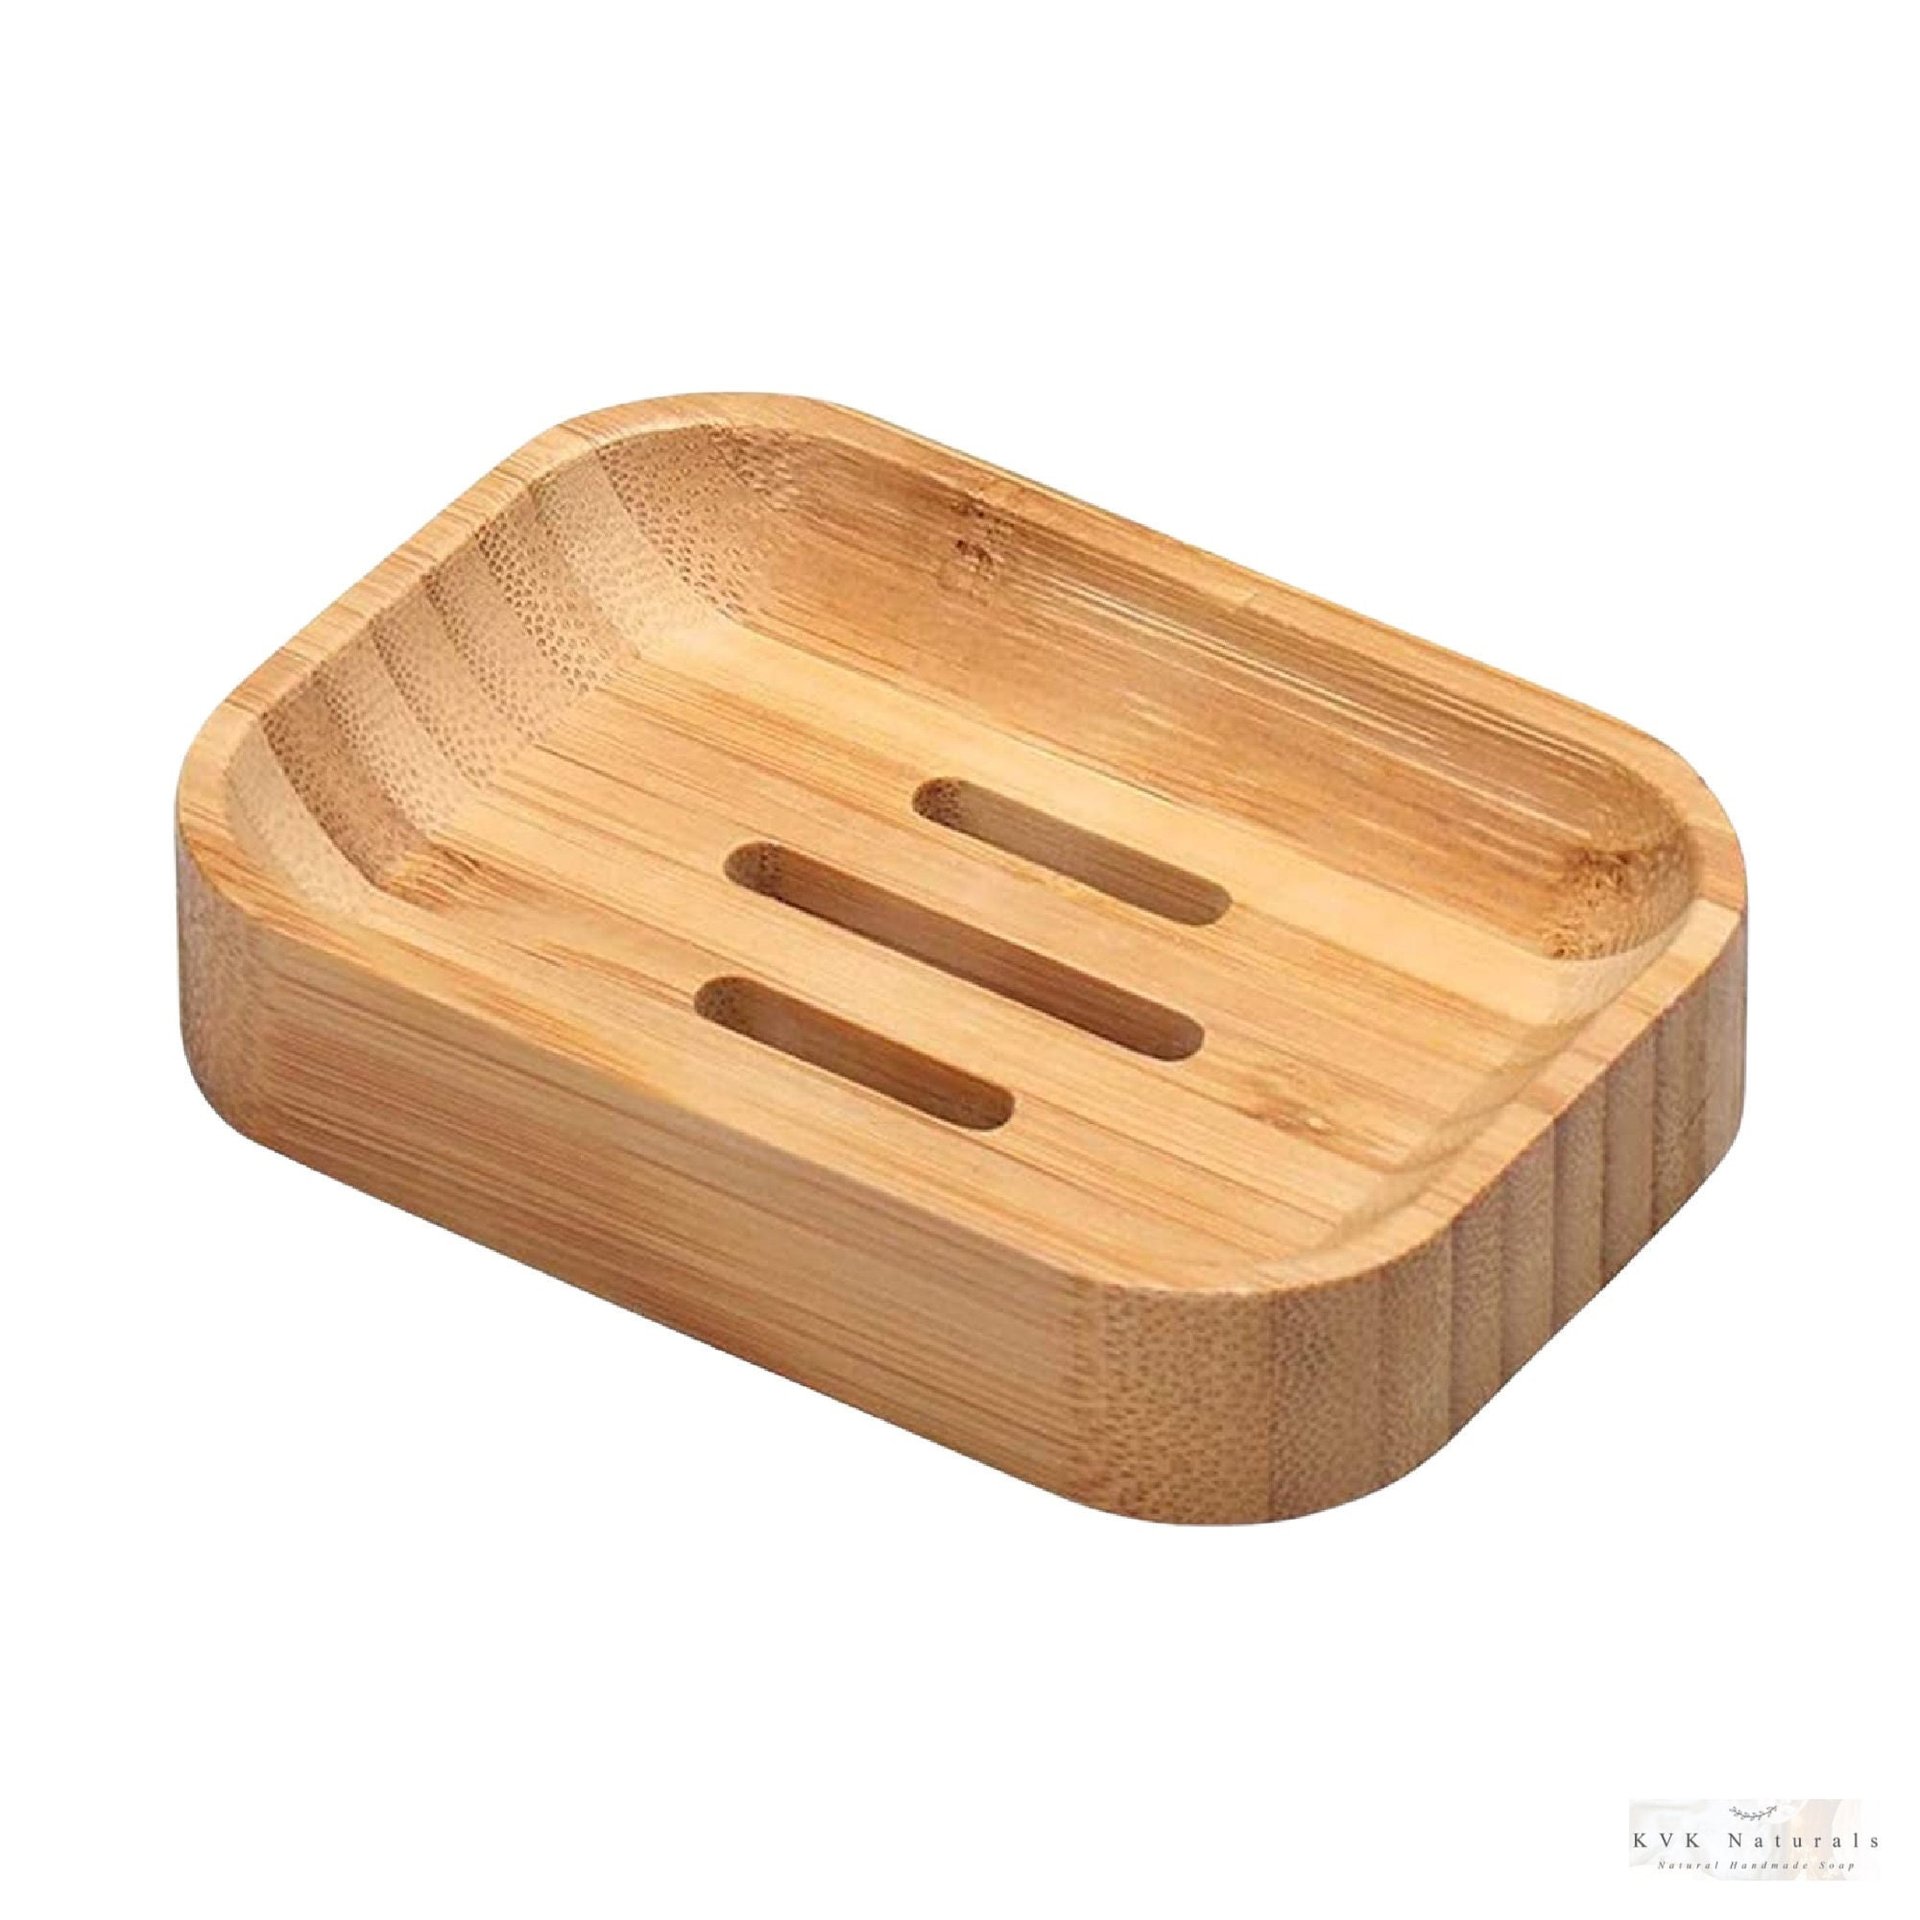 Bamboo Wood Soap Dish - Soap Saver, Eco-Friendly, Soap Dishes, Wooden Soap Dish